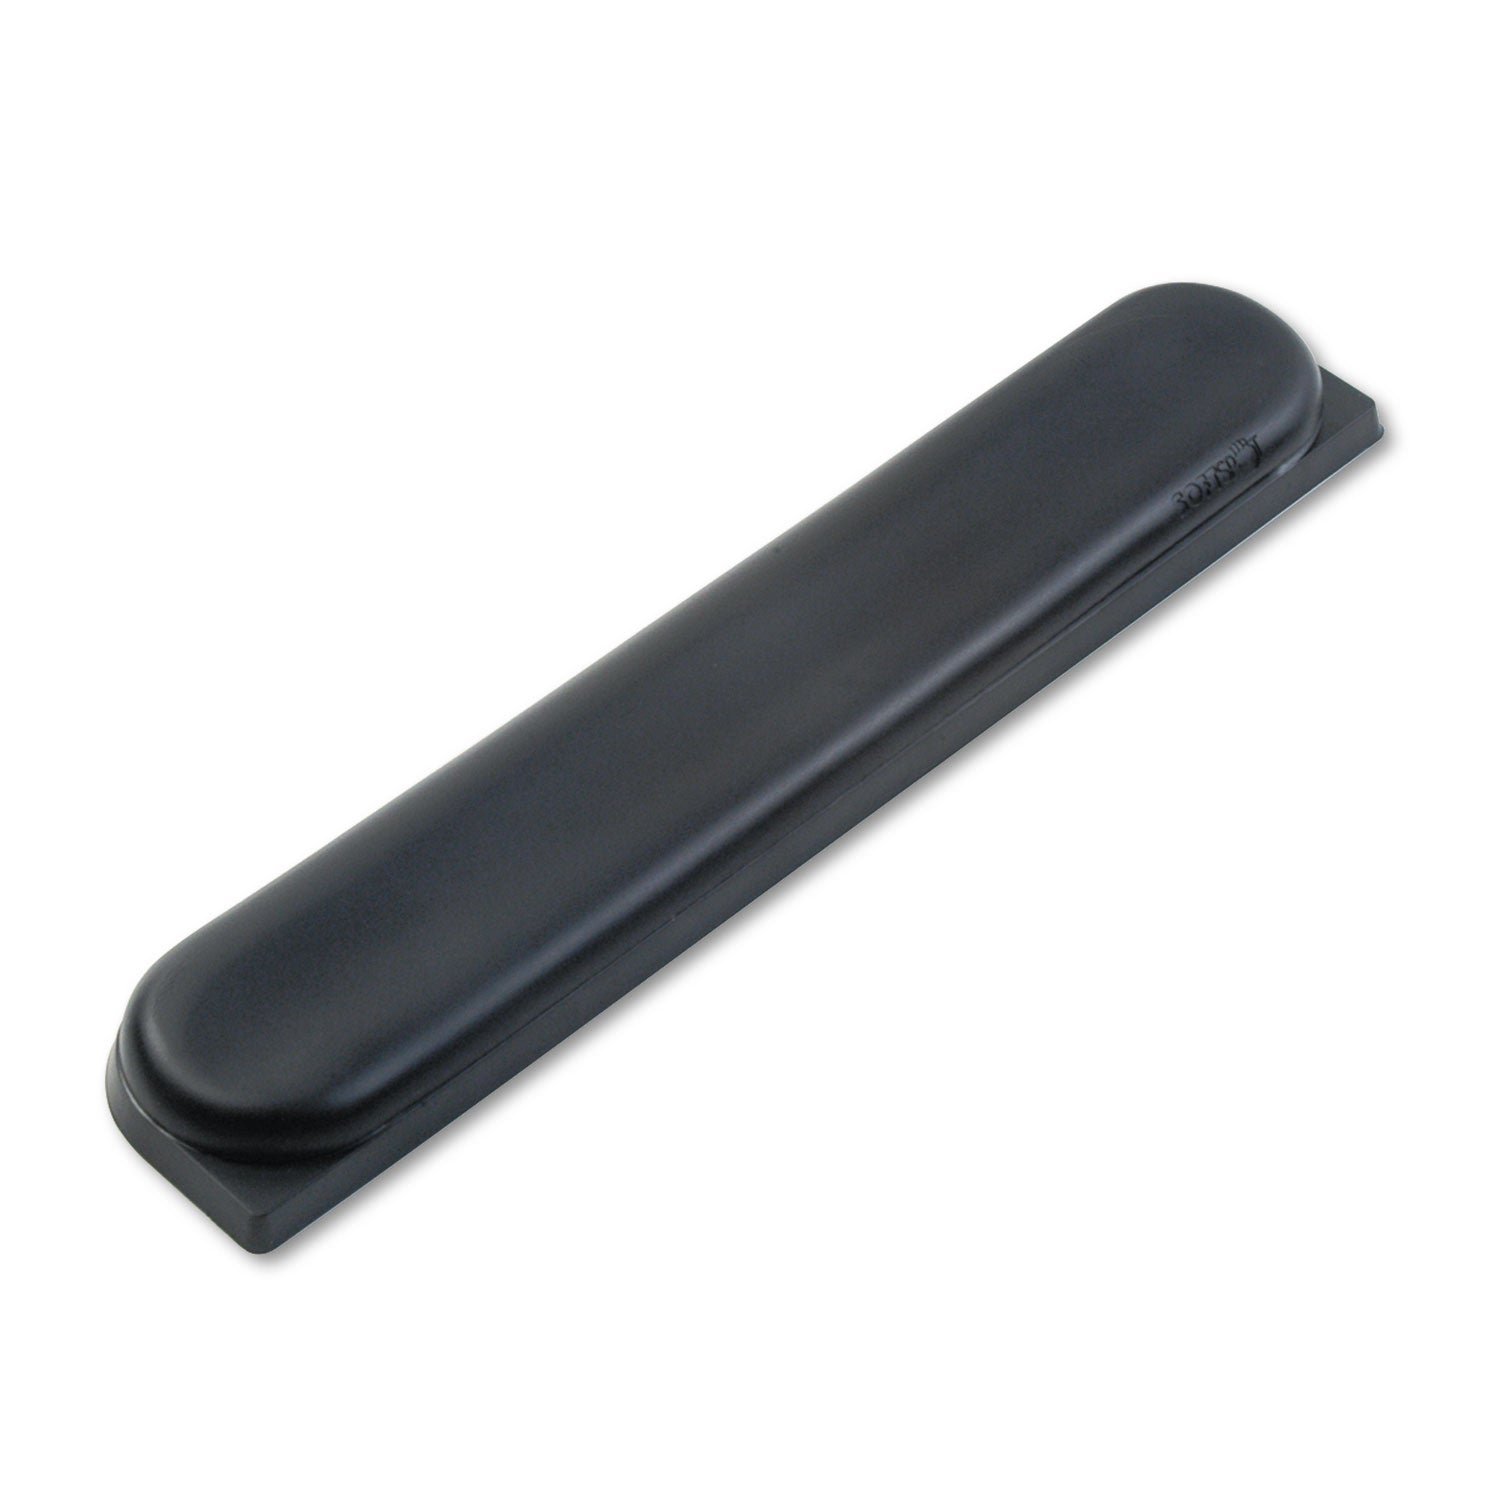 Proline Sculpted Keyboard Wrist Rest, 18 x 3.5, Black - 